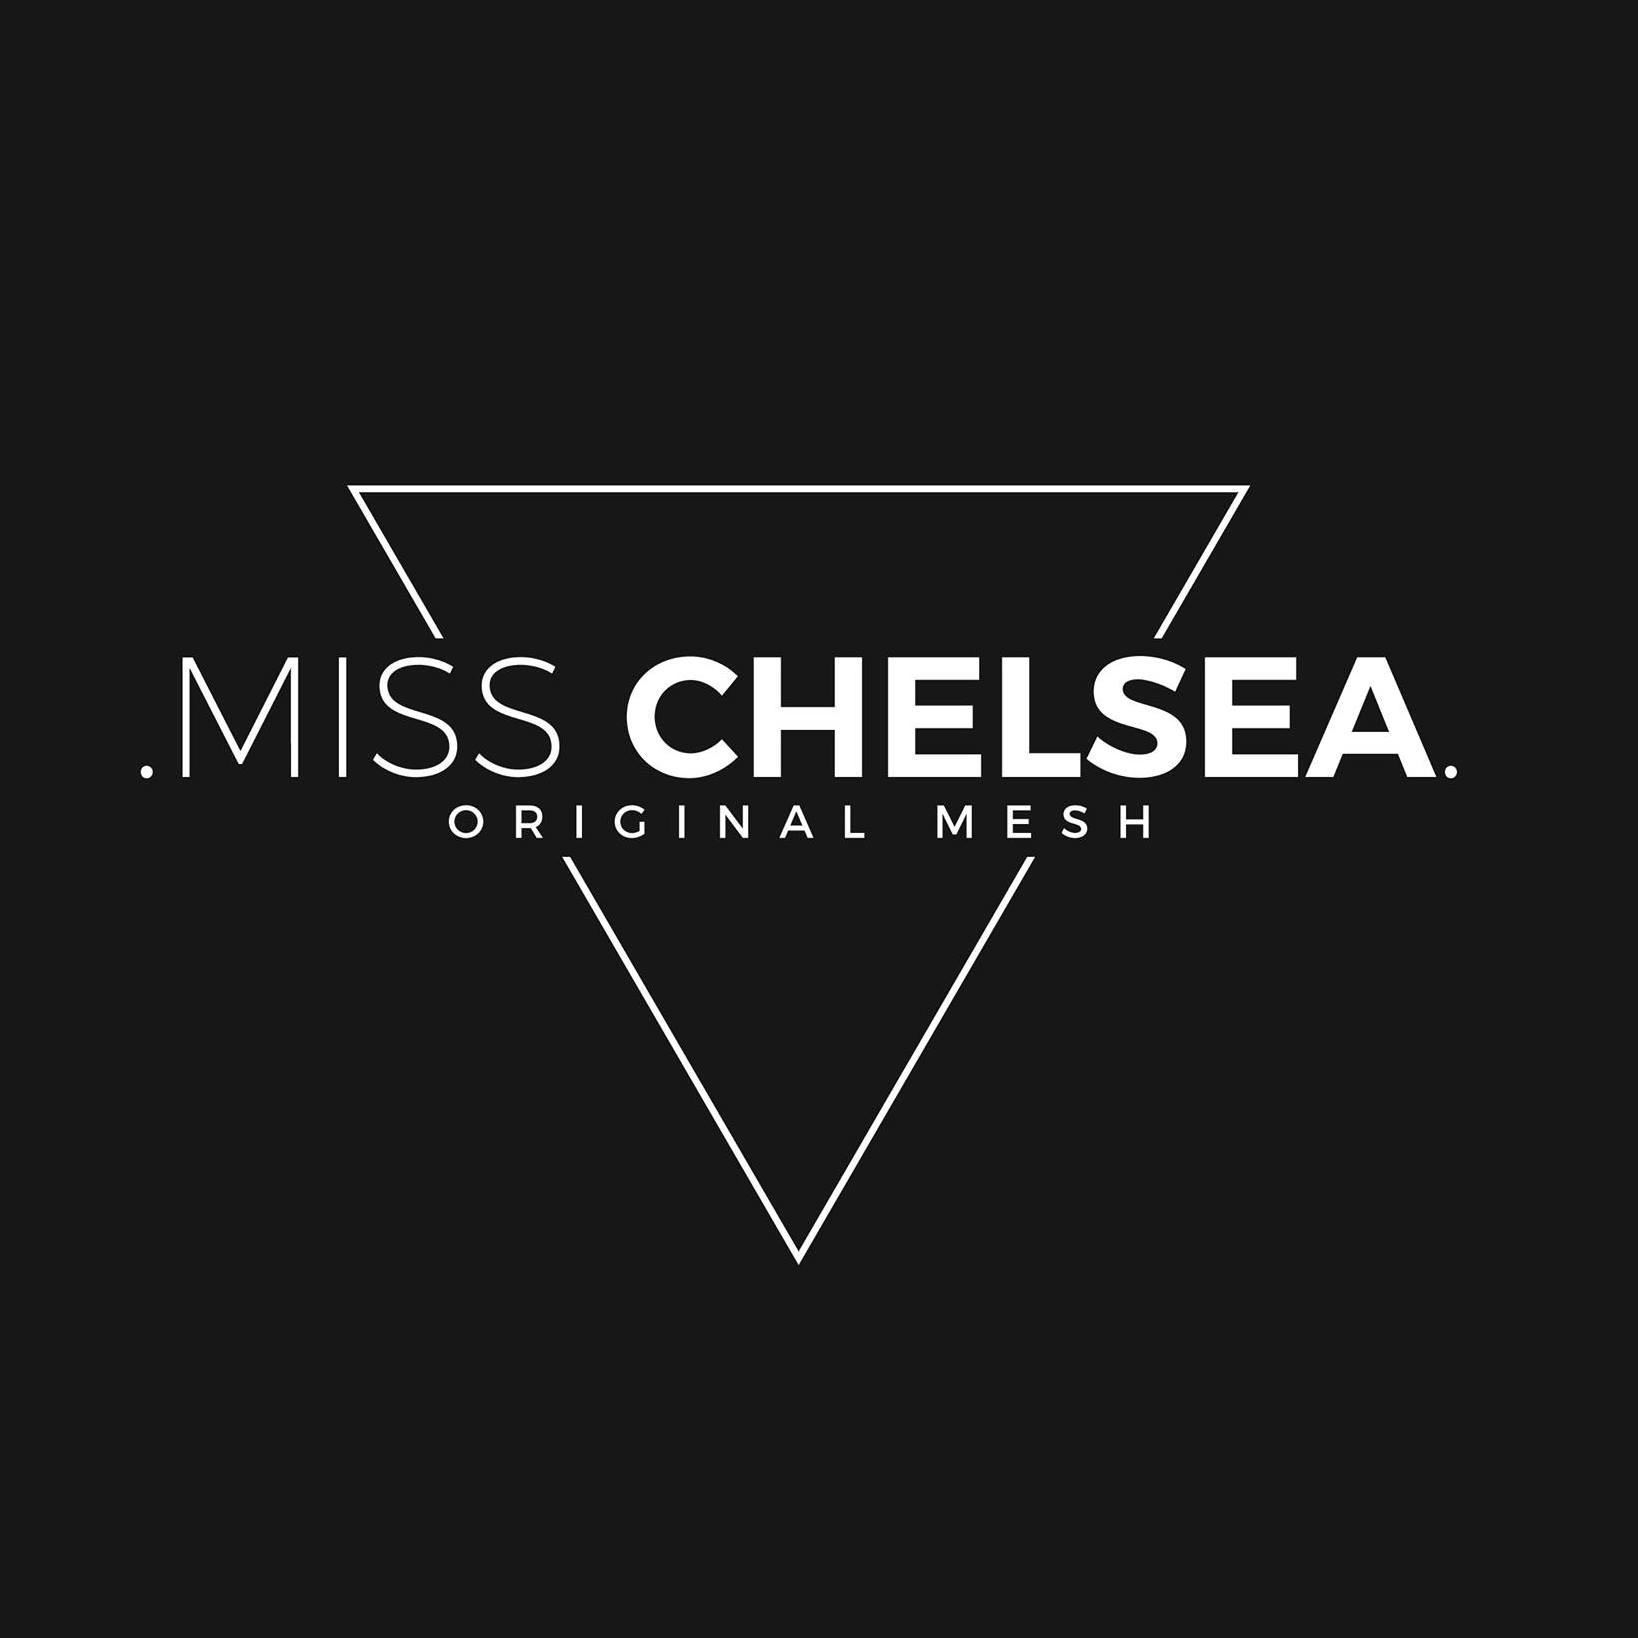 Image result for miss chelsea logo